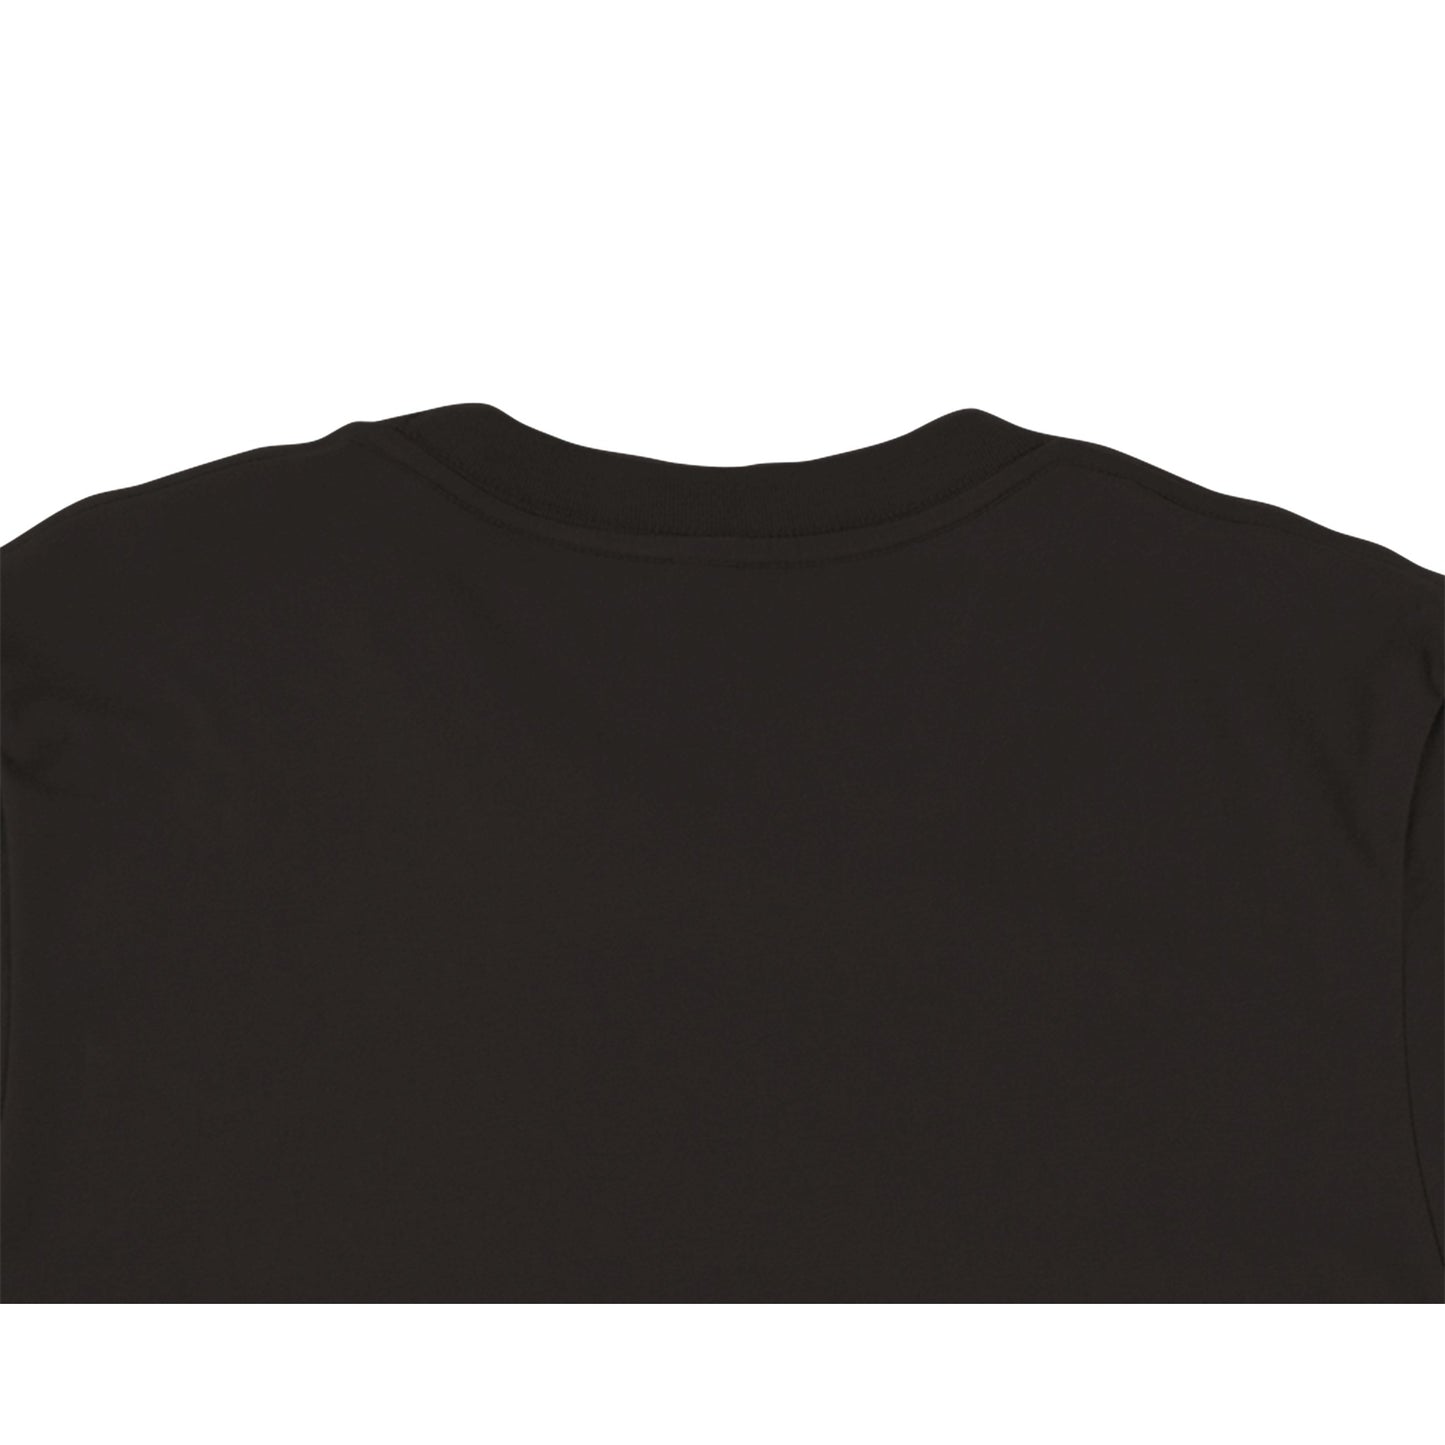 Mazda 787B - Premium Unisex T-shirt (Black)